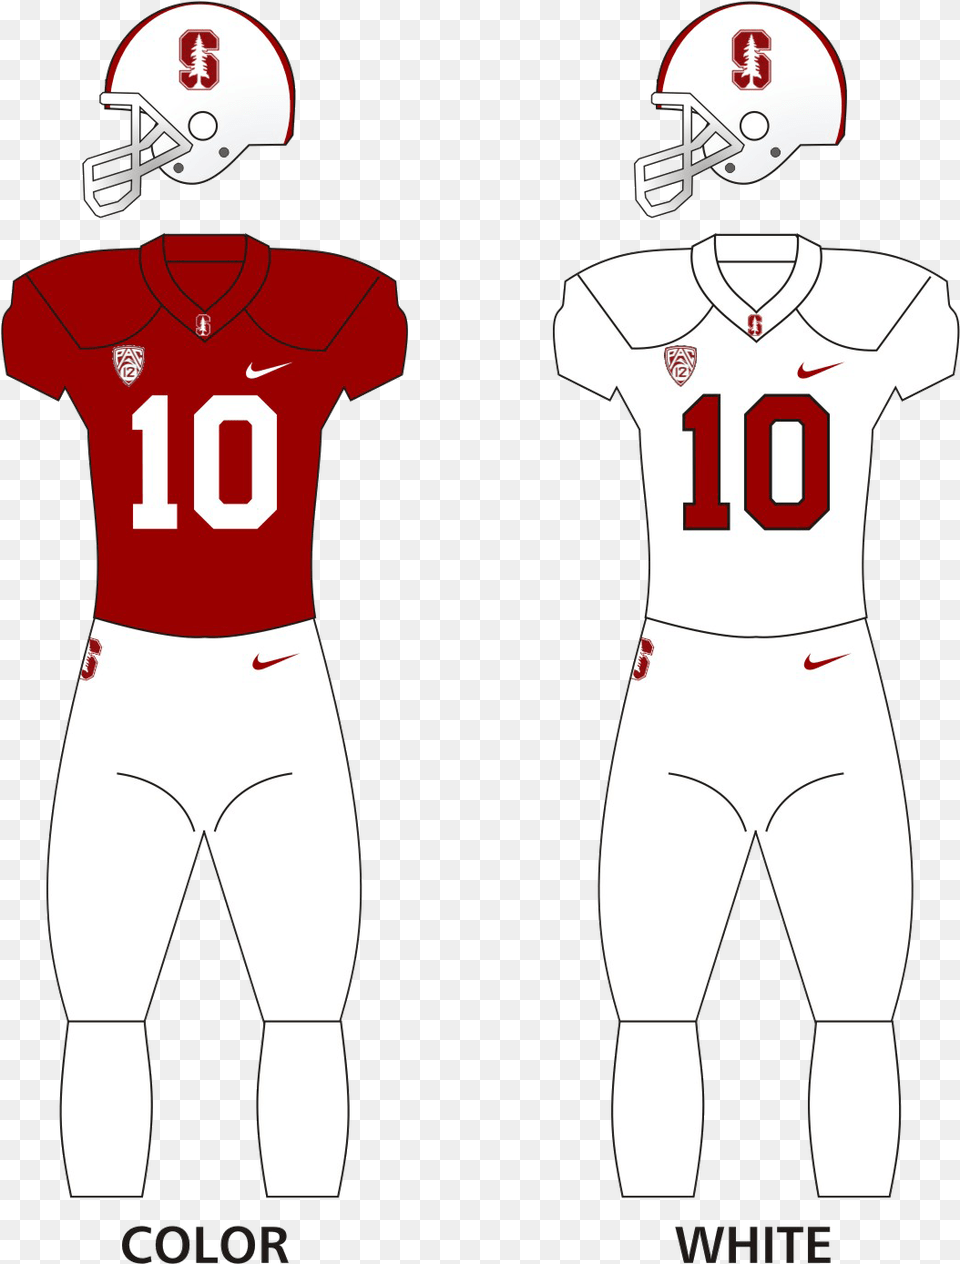 Stanford Cardinal Football Wikipedia Alabama Football Uniforms 2020, Helmet, American Football, Person, Playing American Football Png Image